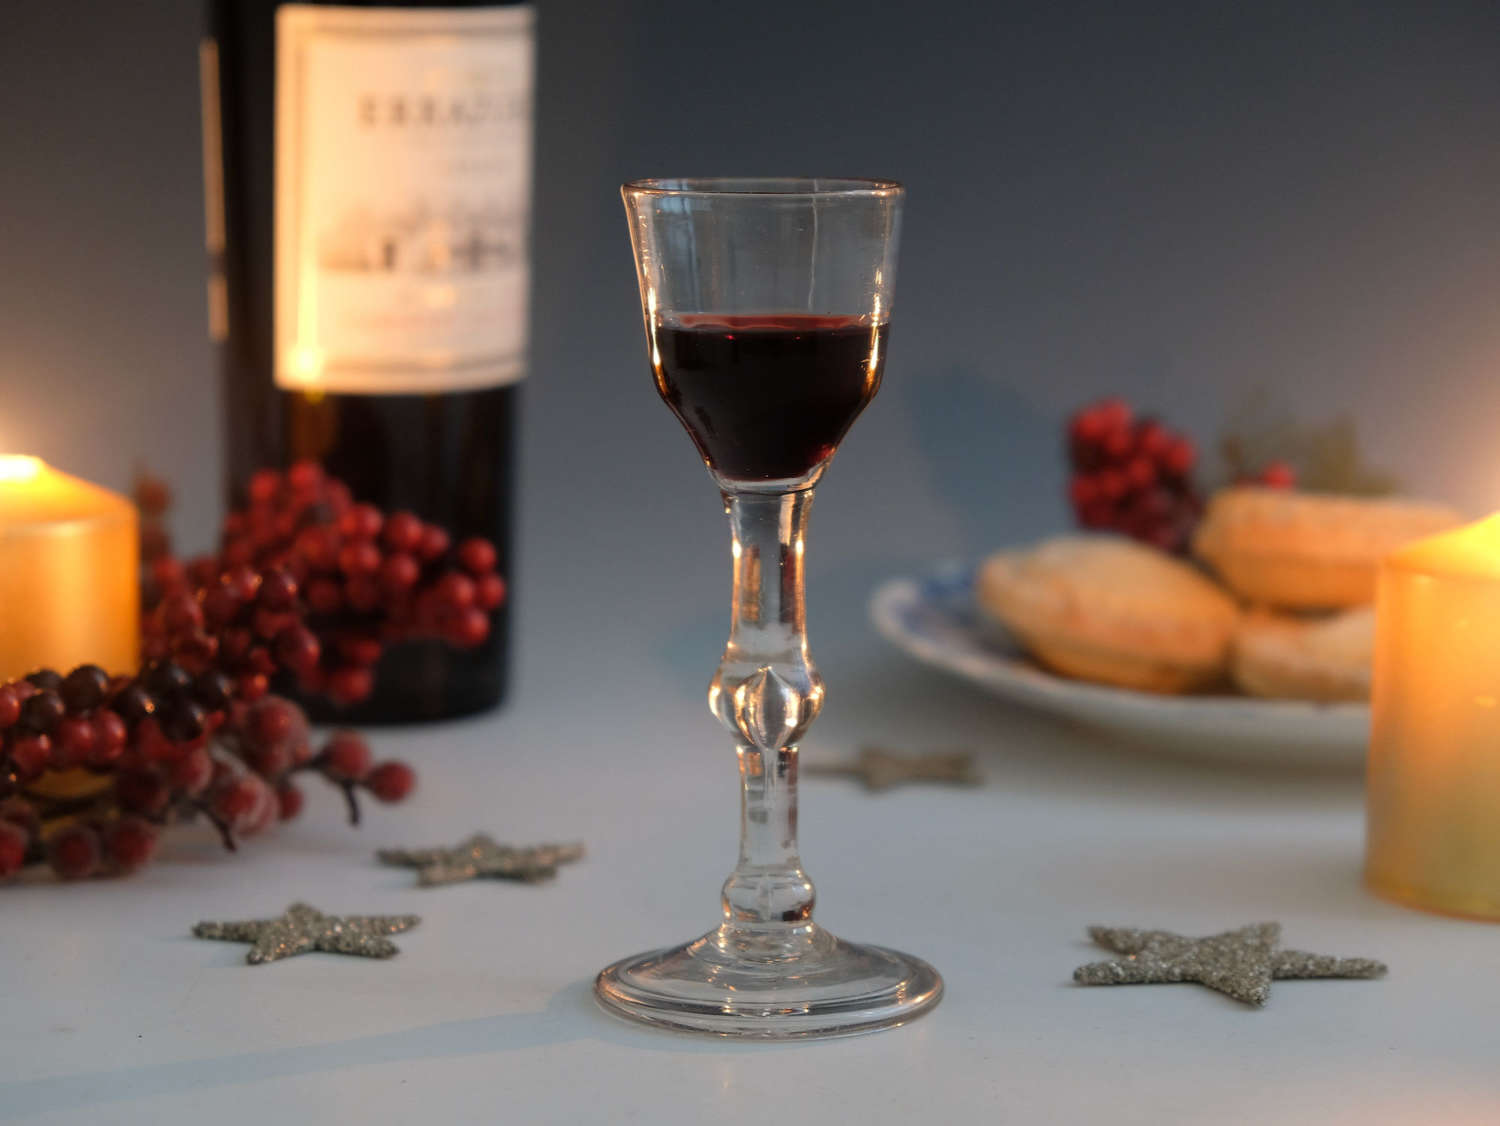 Balustroid wine glass English c17650